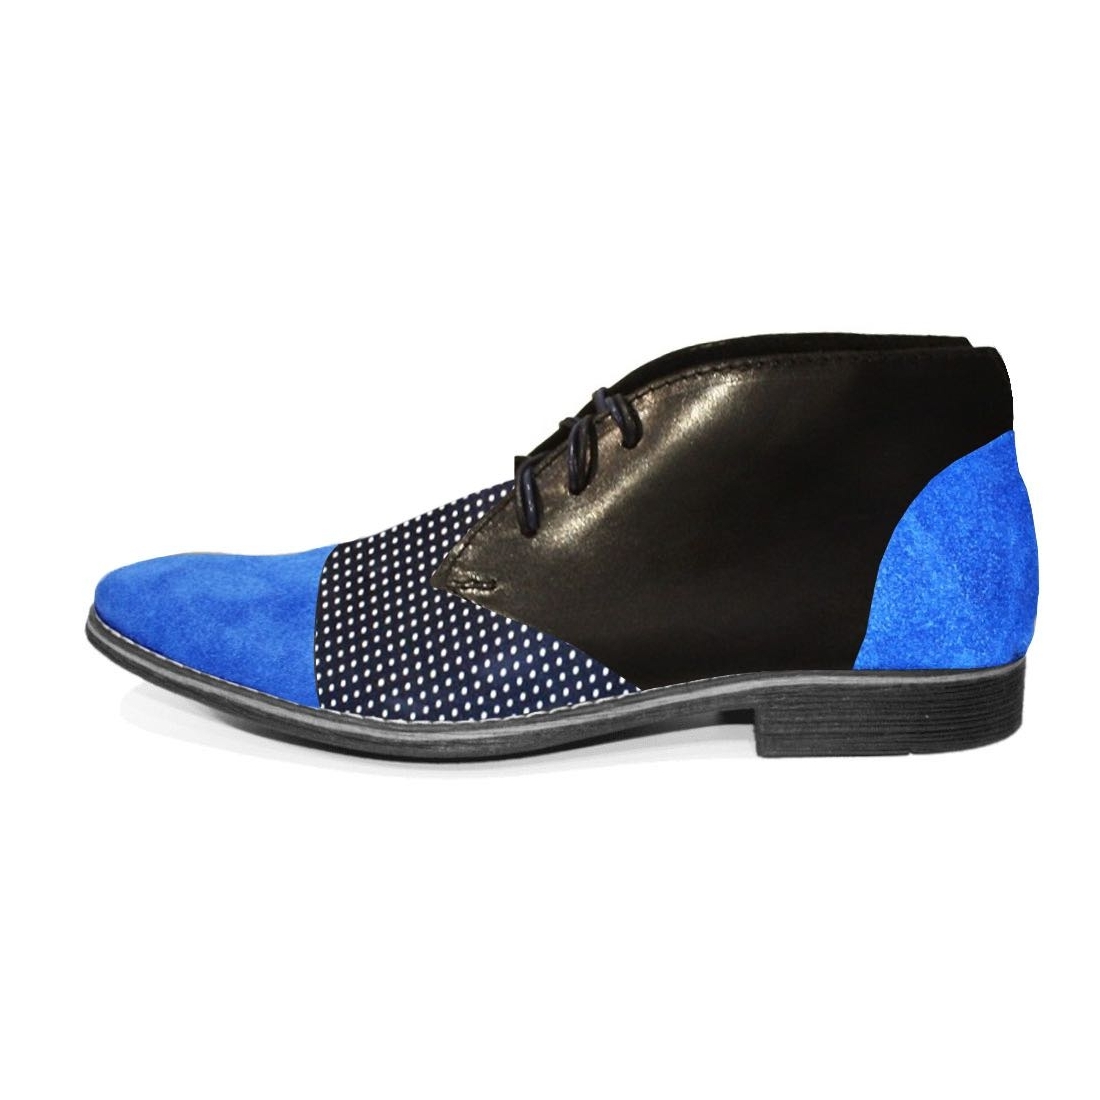 Modello Dotello - чукка мужские - Handmade Colorful Italian Leather Shoes